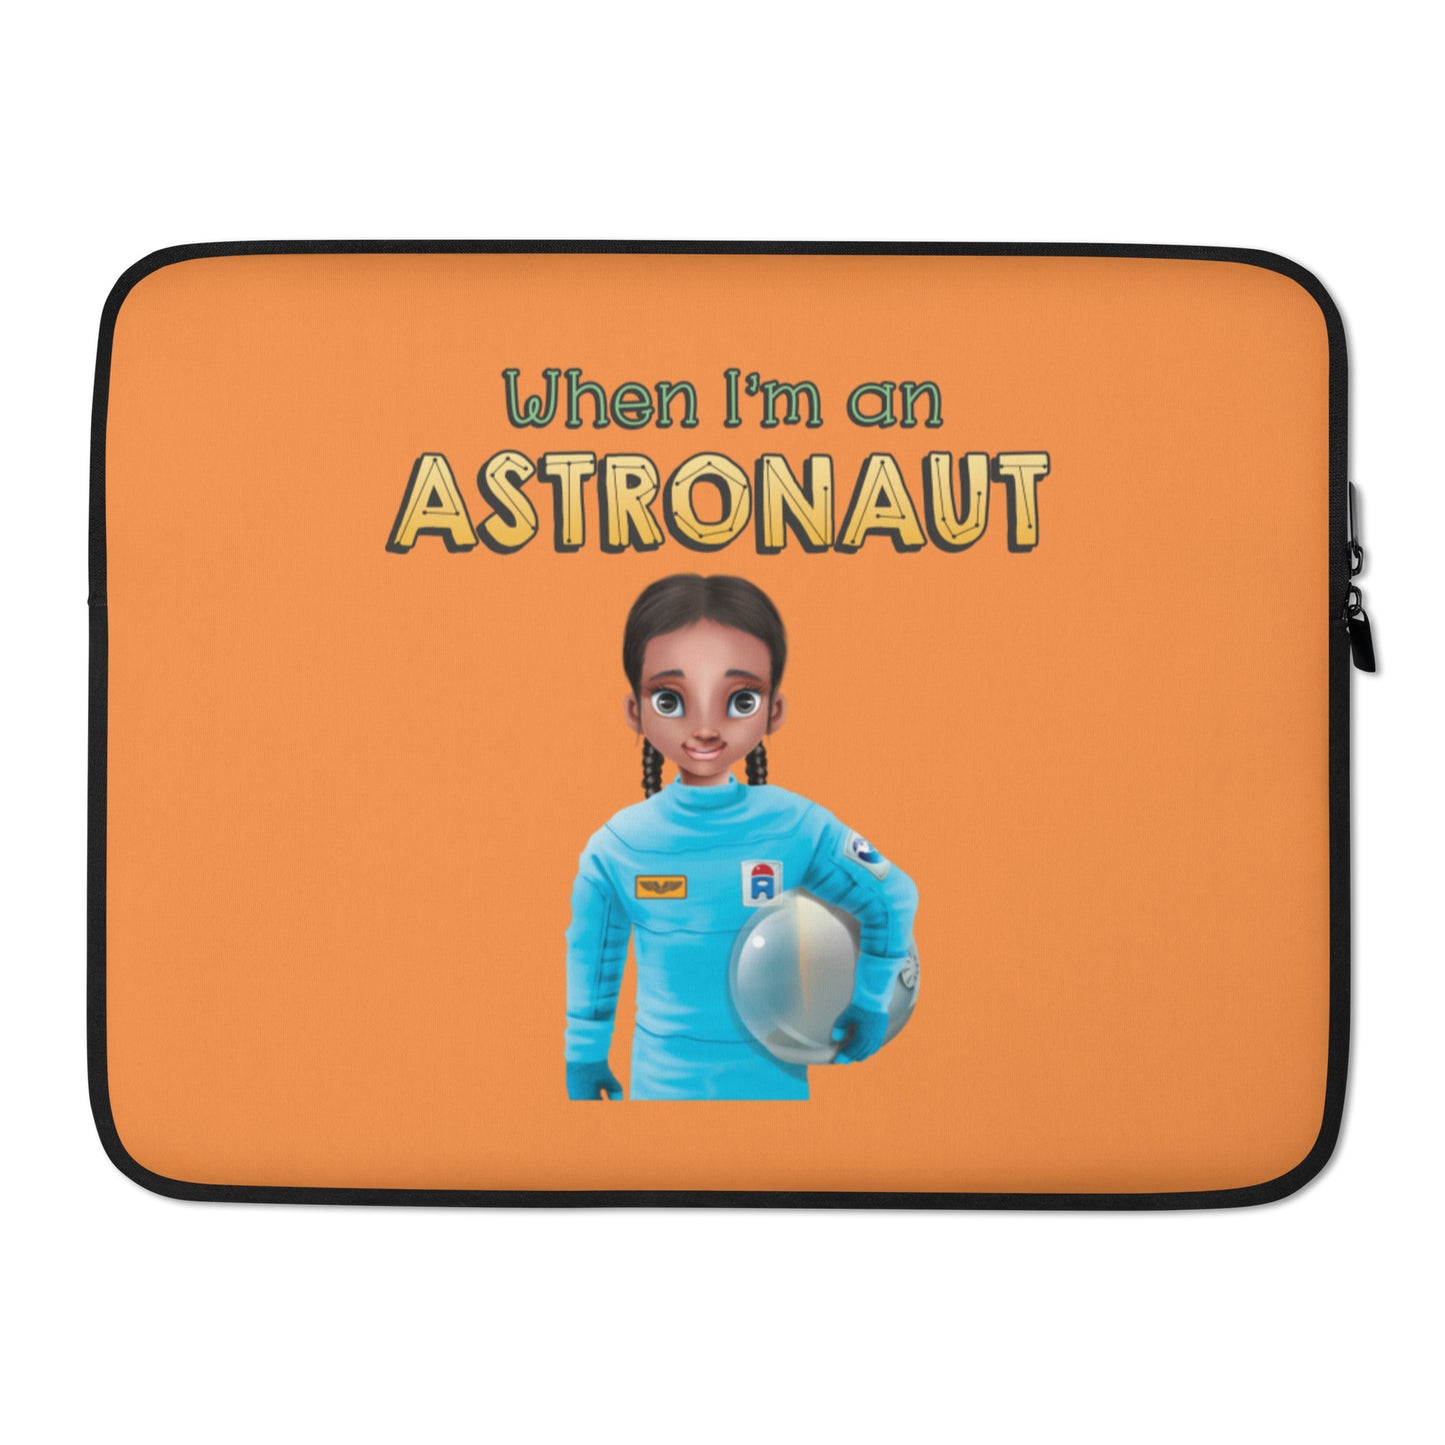 When I'm an Astronaut Neoprene Laptop Sleeve